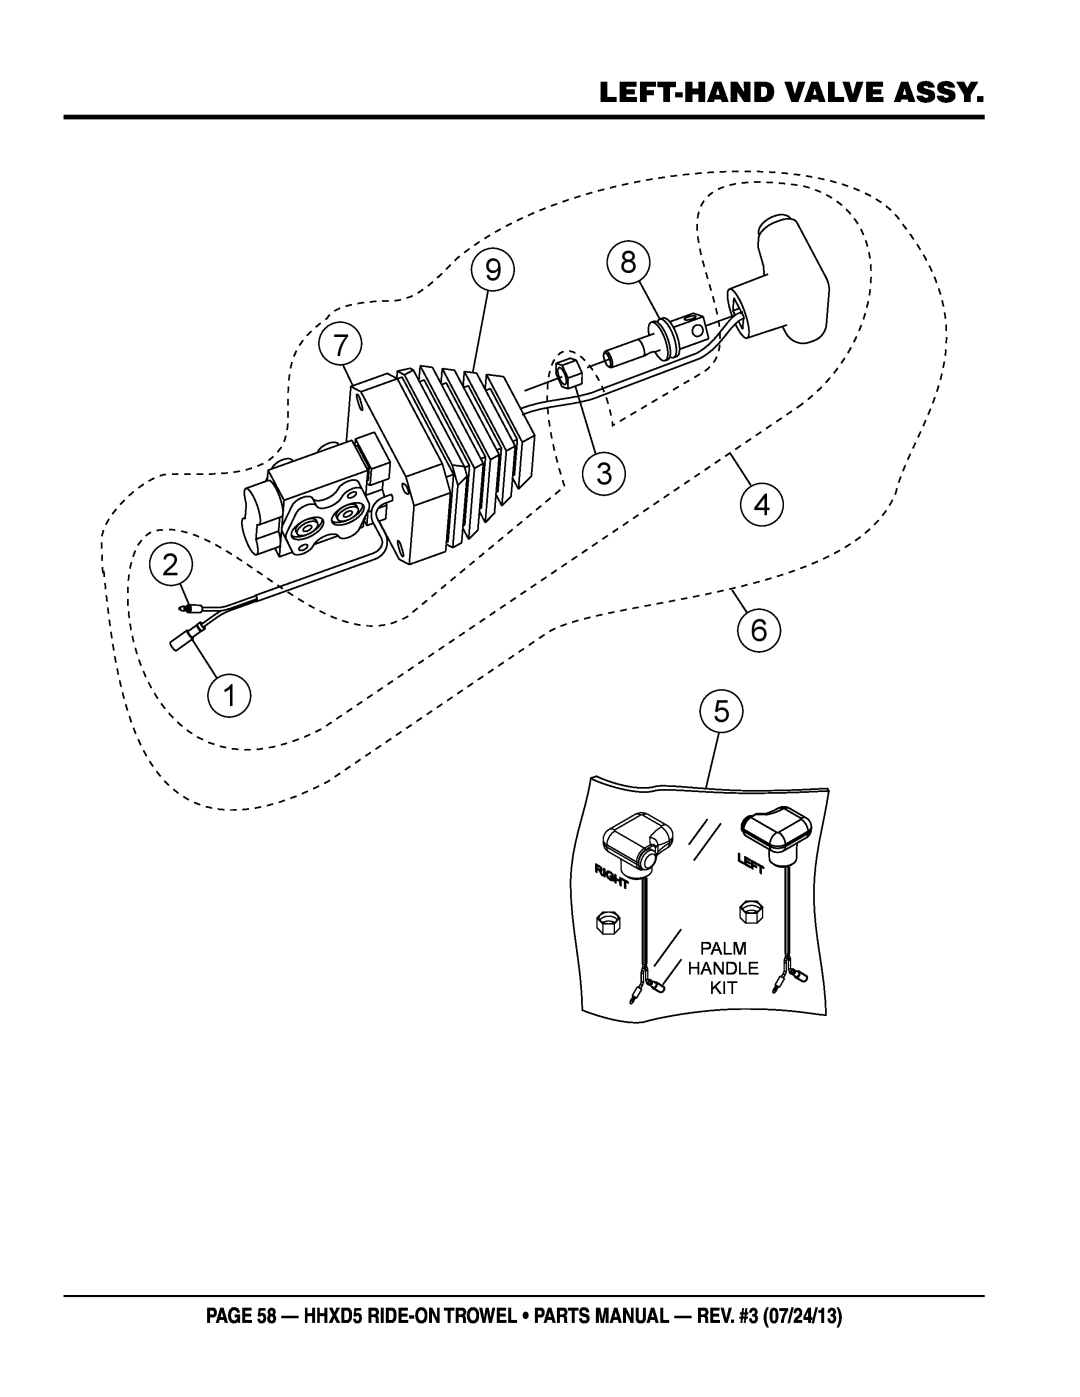 Multiquip HHSD5 left-hand valve assy, page 58 - HHXD5 RIDE-ON TROWEL parts manual - rev. #3 07/24/13, Palm Handle Kit 